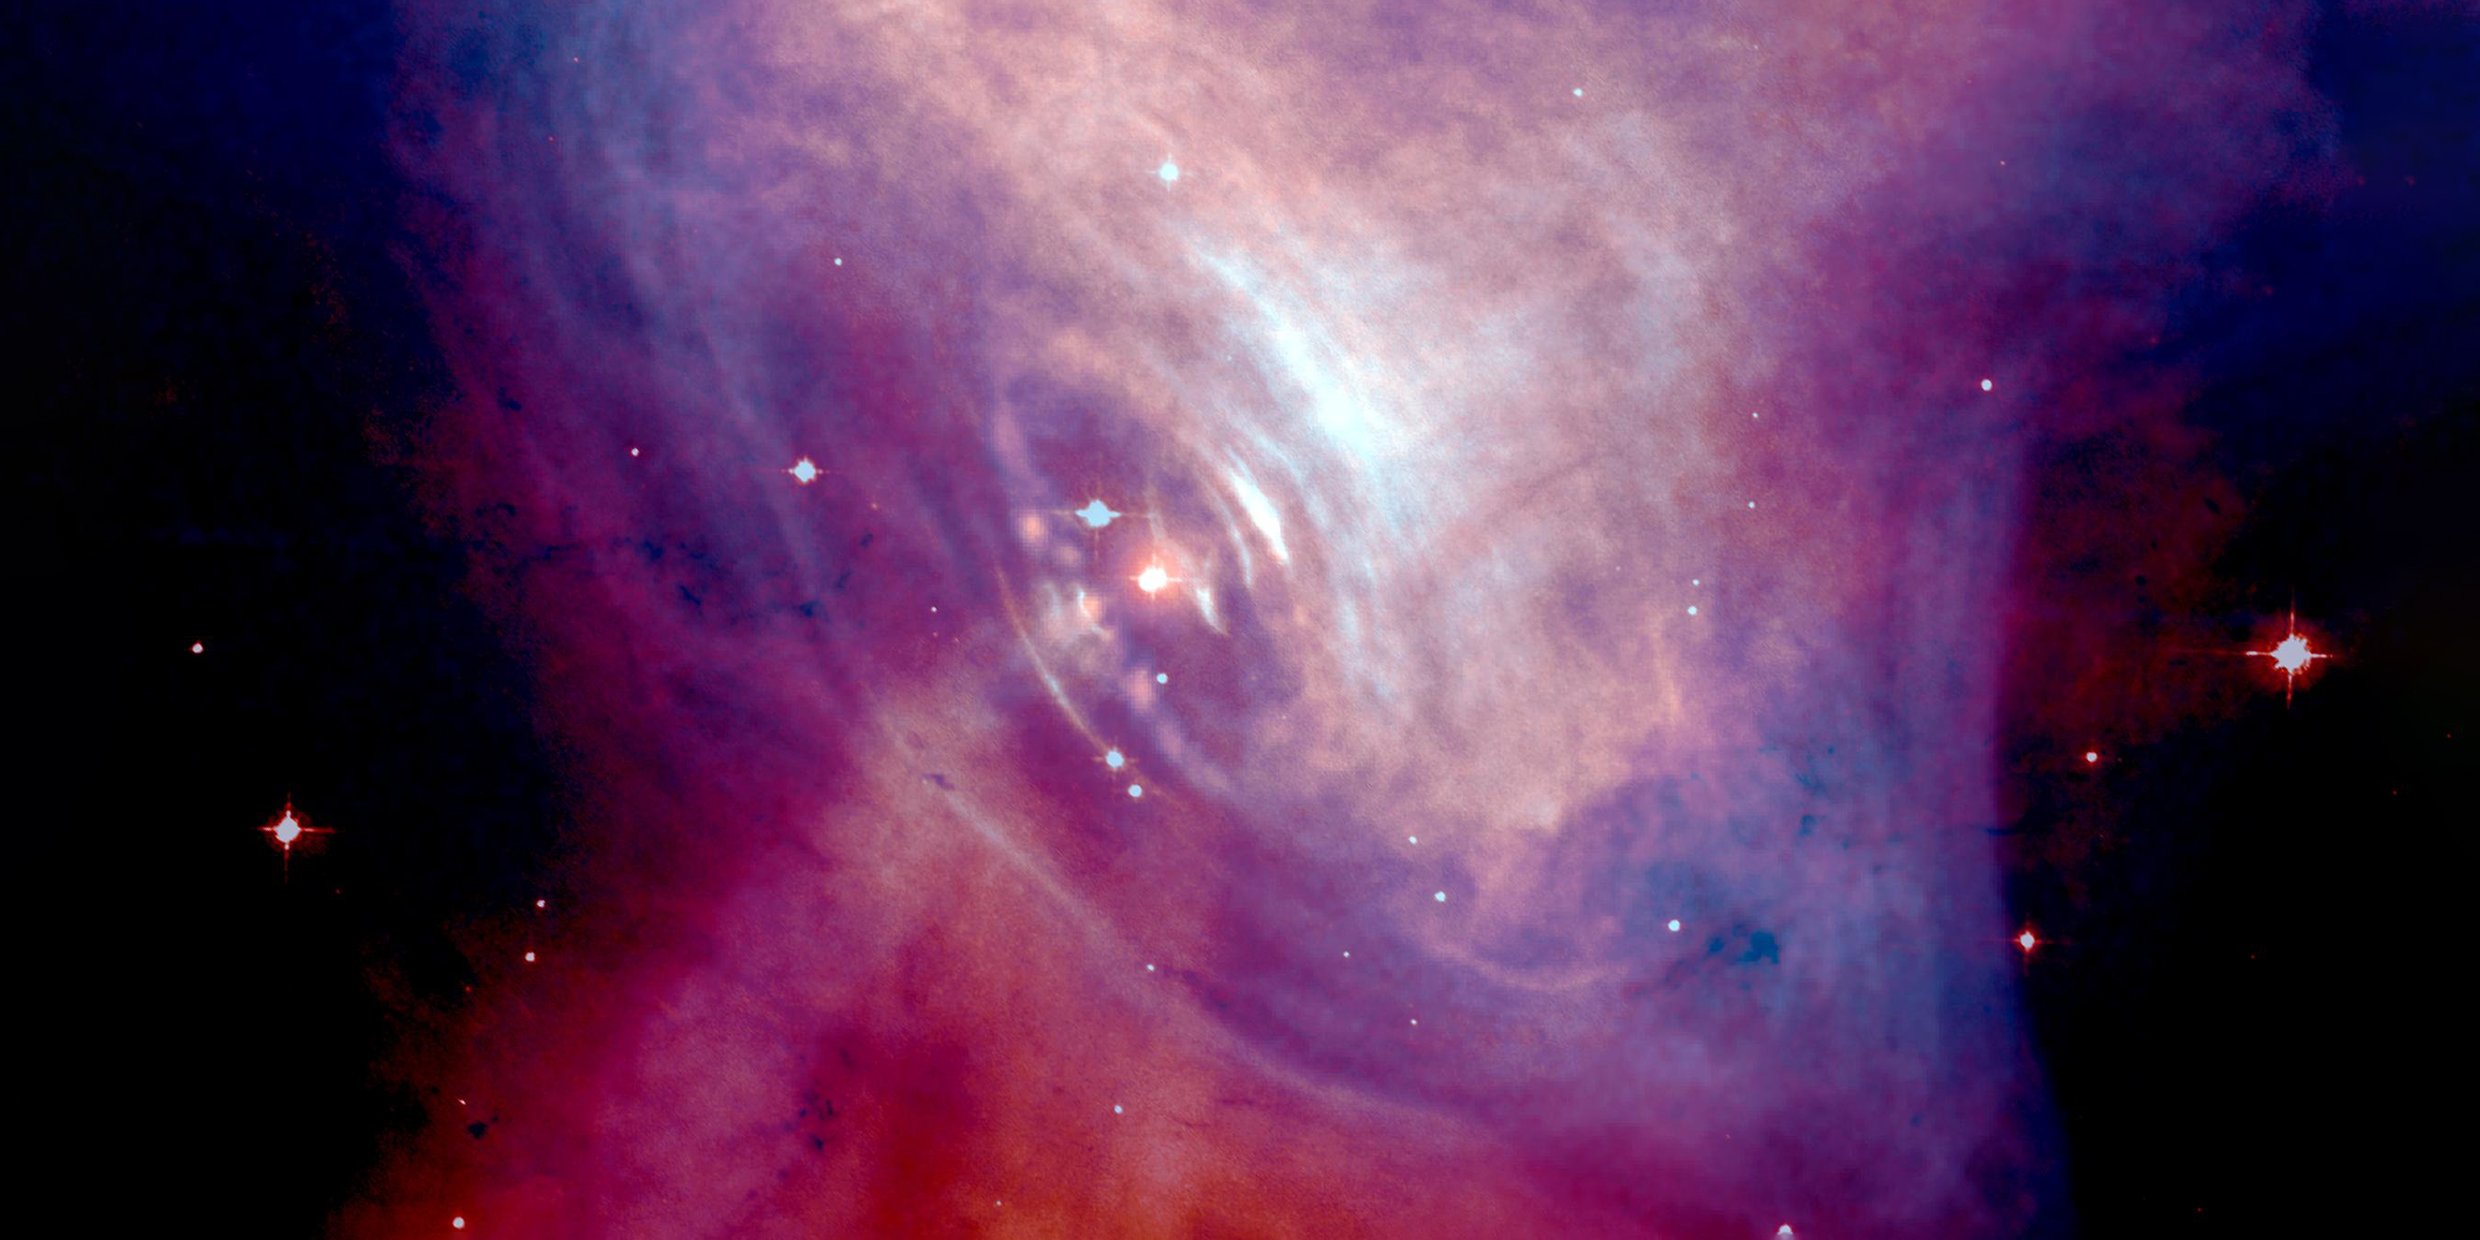 Telescopic image of nebula surrounding pulsar